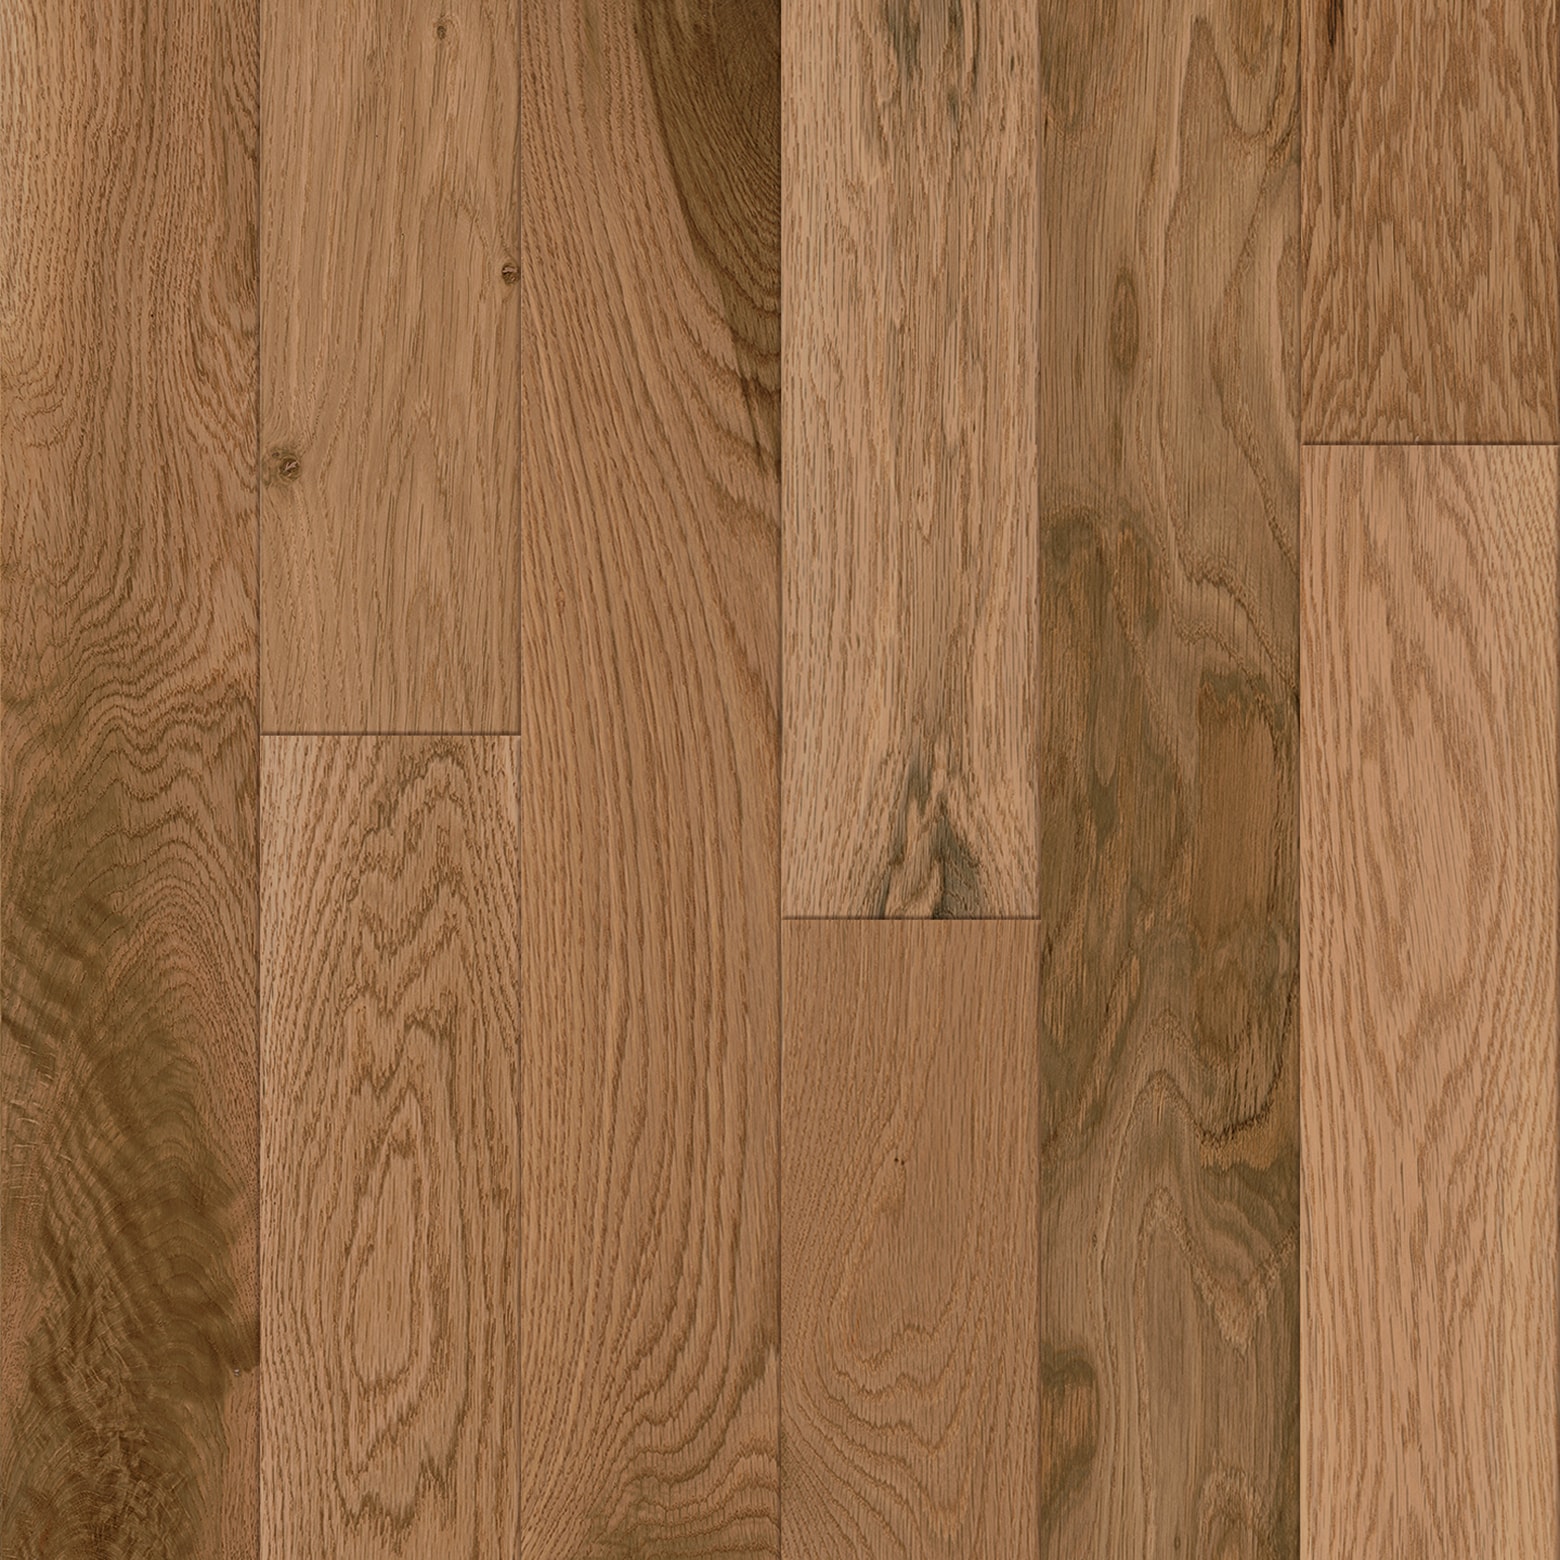 Natural hardwood floor